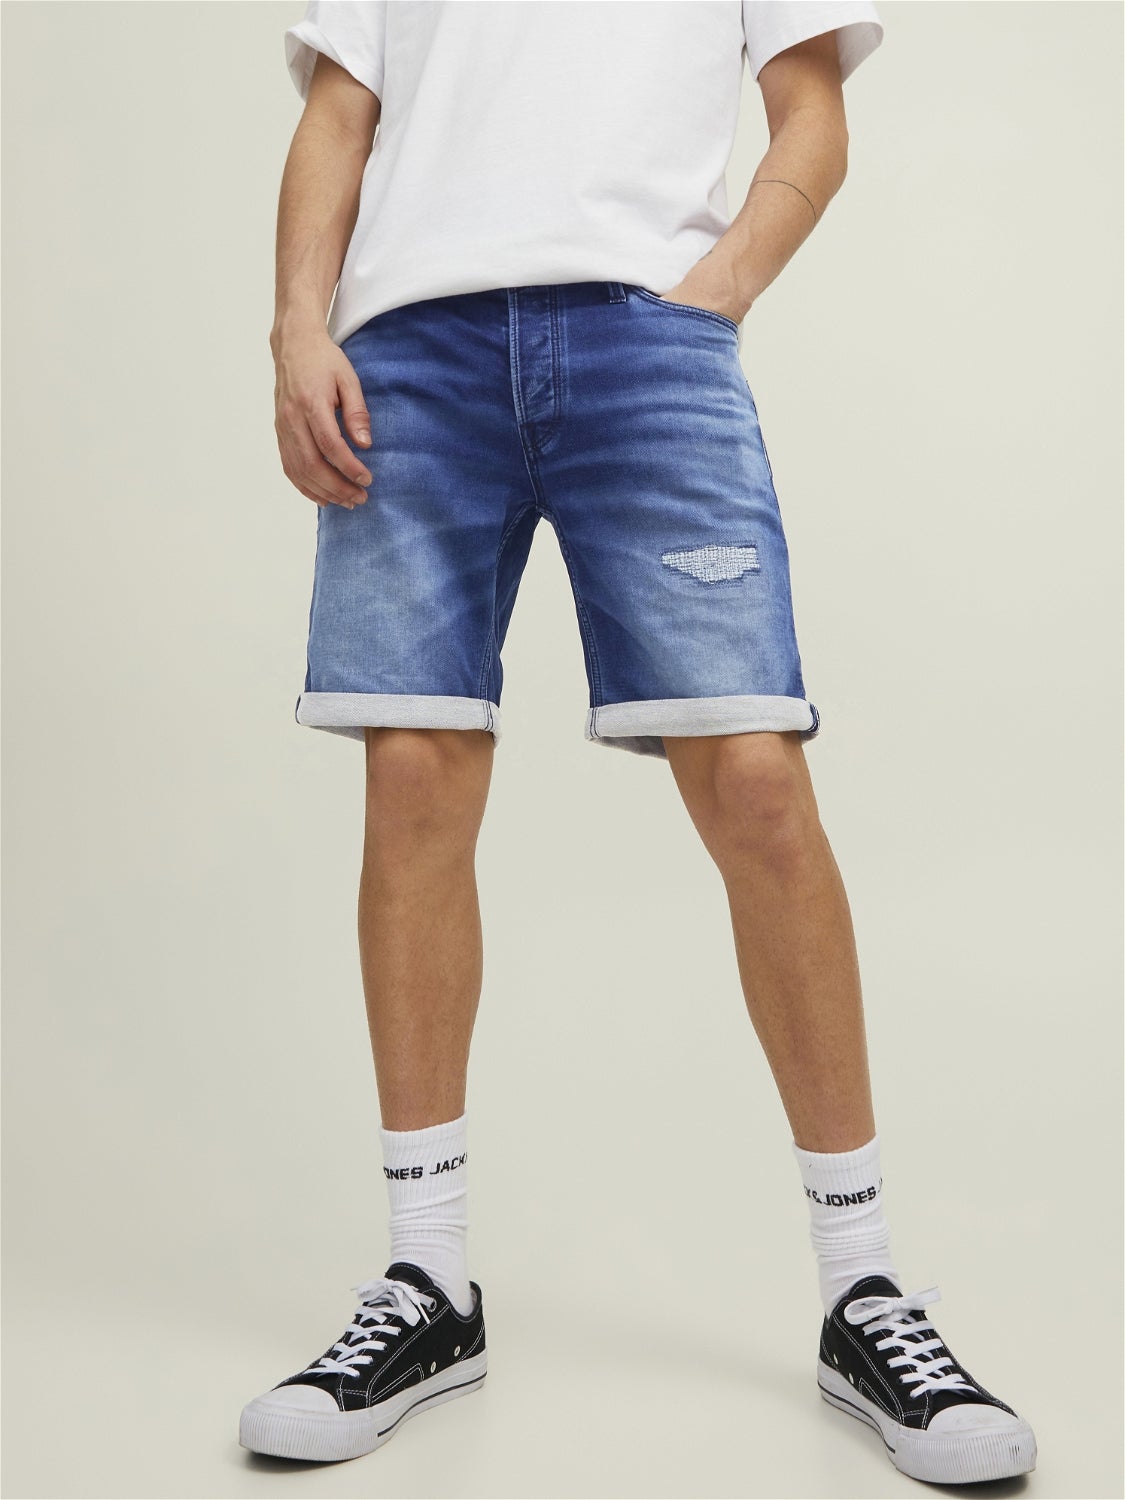 discount 77% Jack & Jones Jack & Jones shorts MEN FASHION Trousers Shorts Navy Blue/Red/White M 